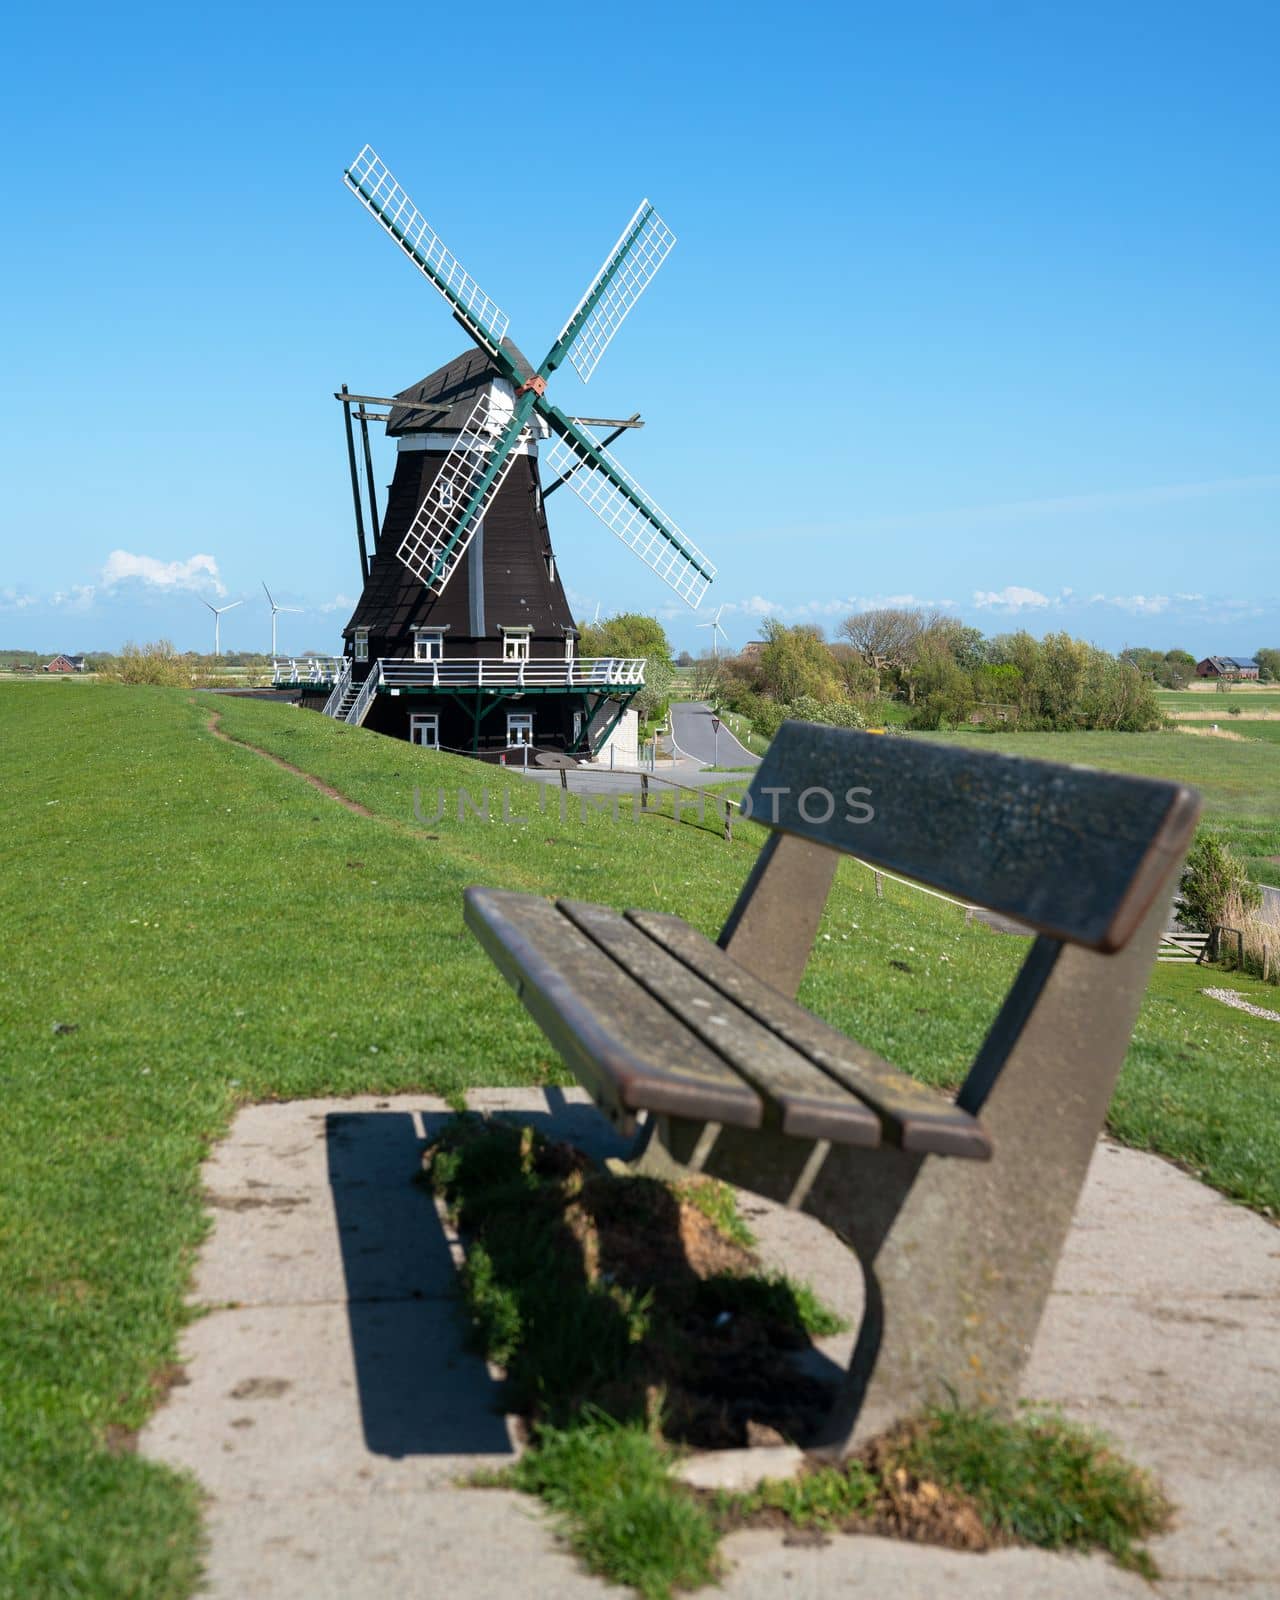 Windmill, Pellworm, Germany by alfotokunst